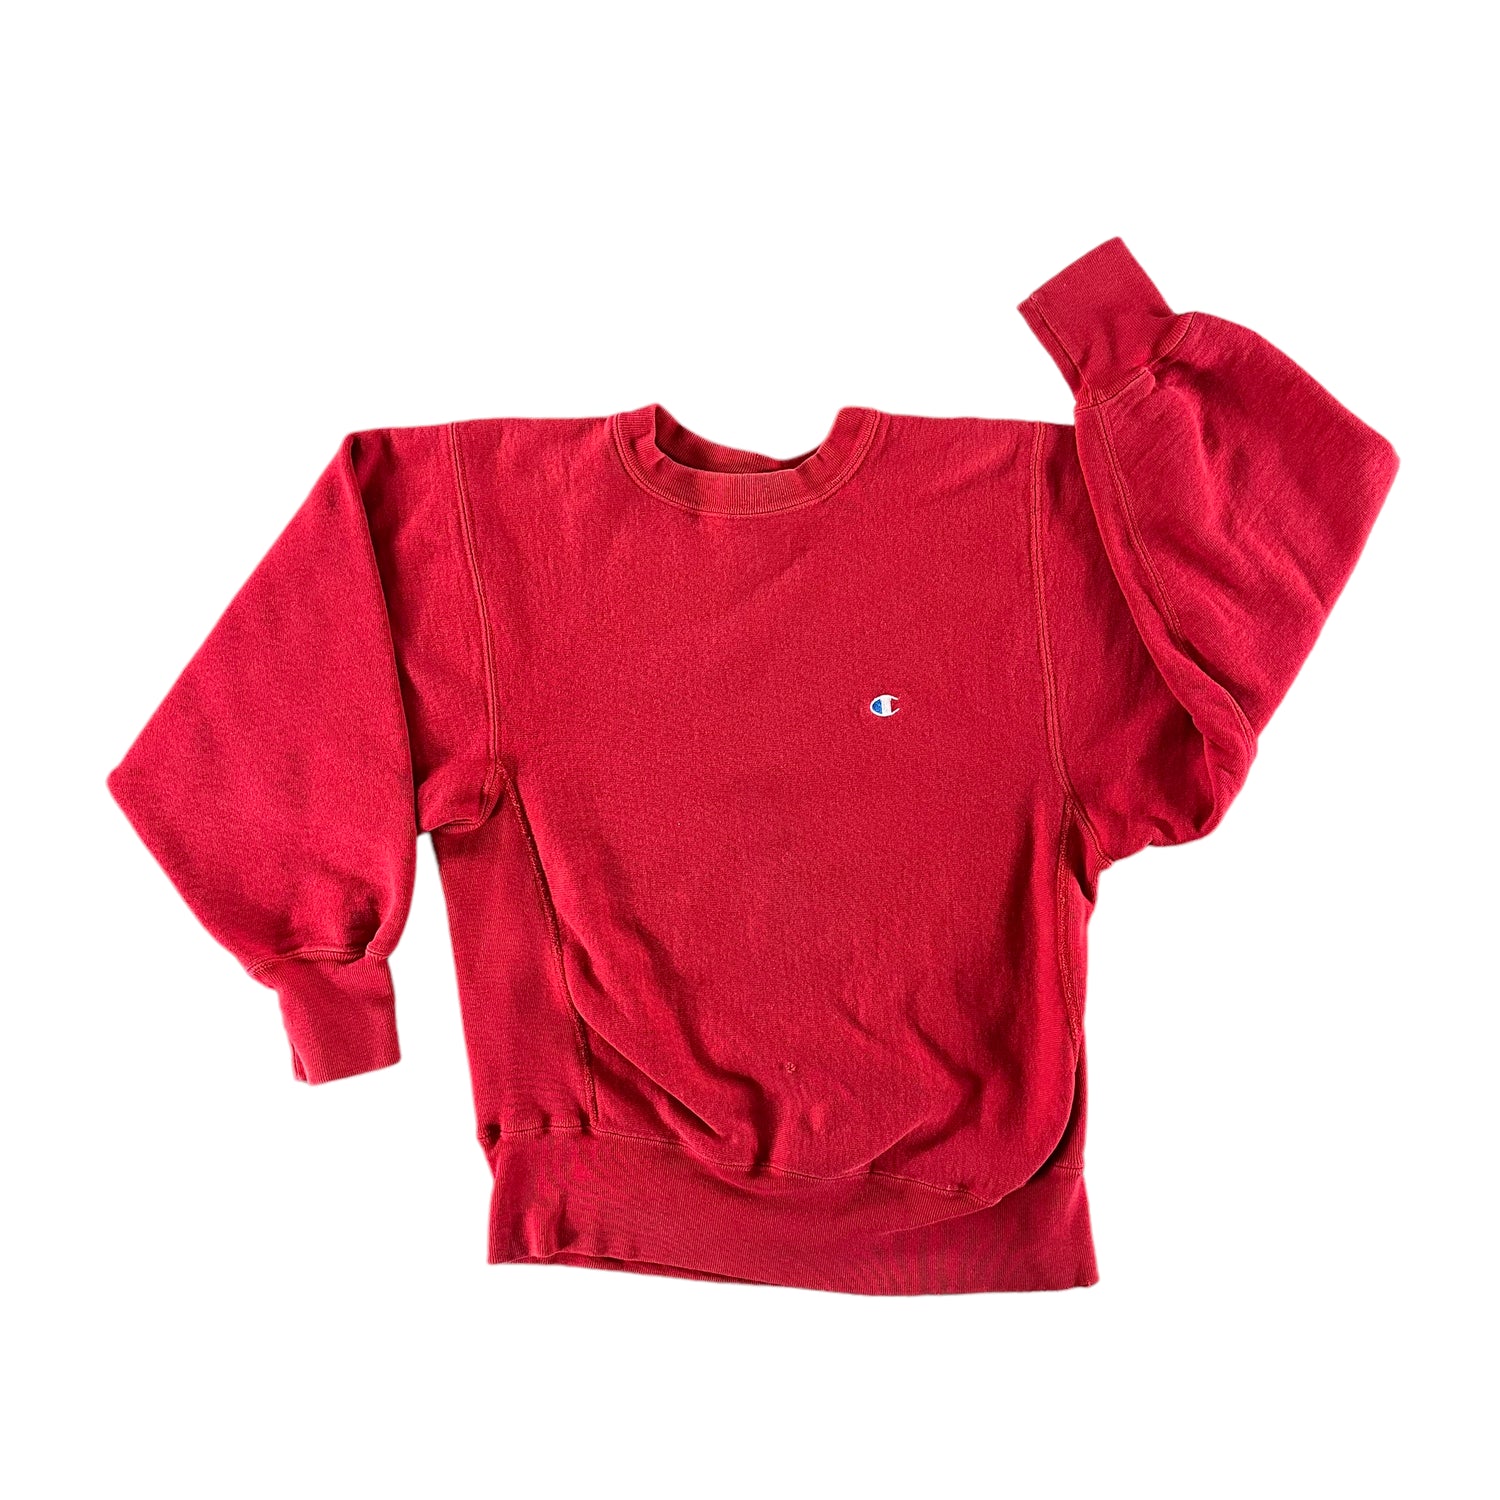 Vintage Late 1980s Reverse Weave Champion Sweatshirt size Medium